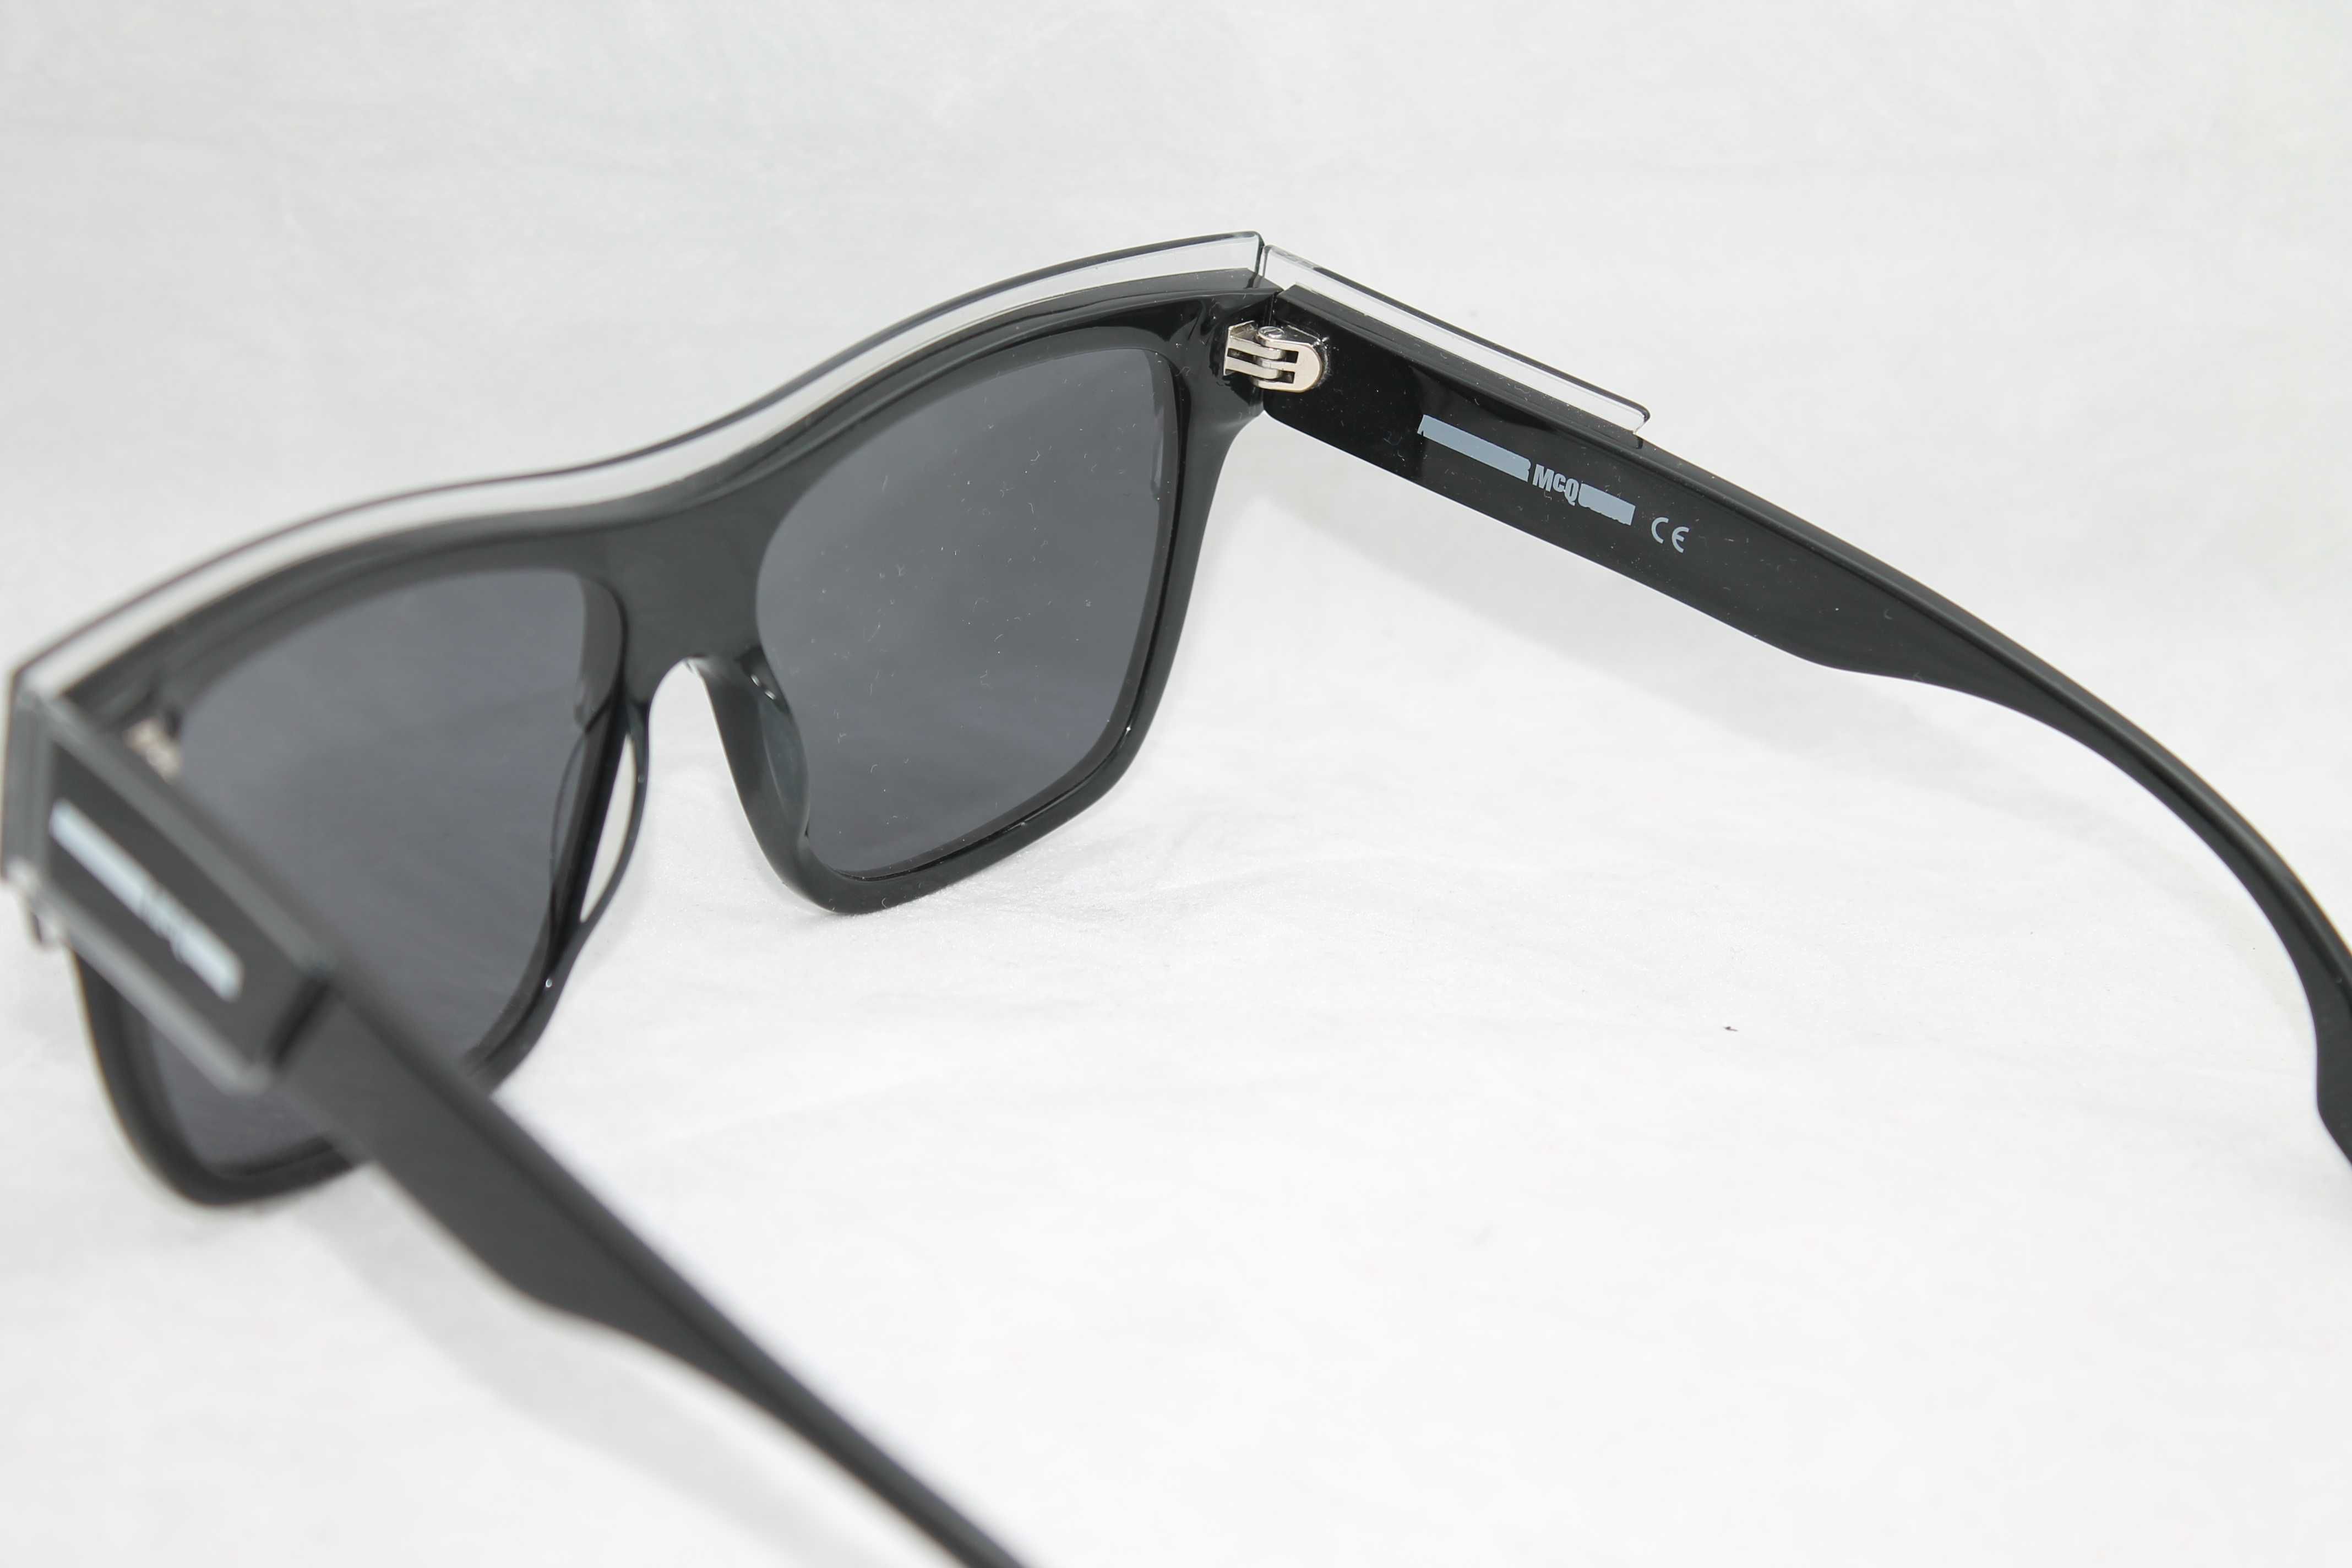 Ochelari de soare MCQ model MQ004s marime  55-15 140 noi